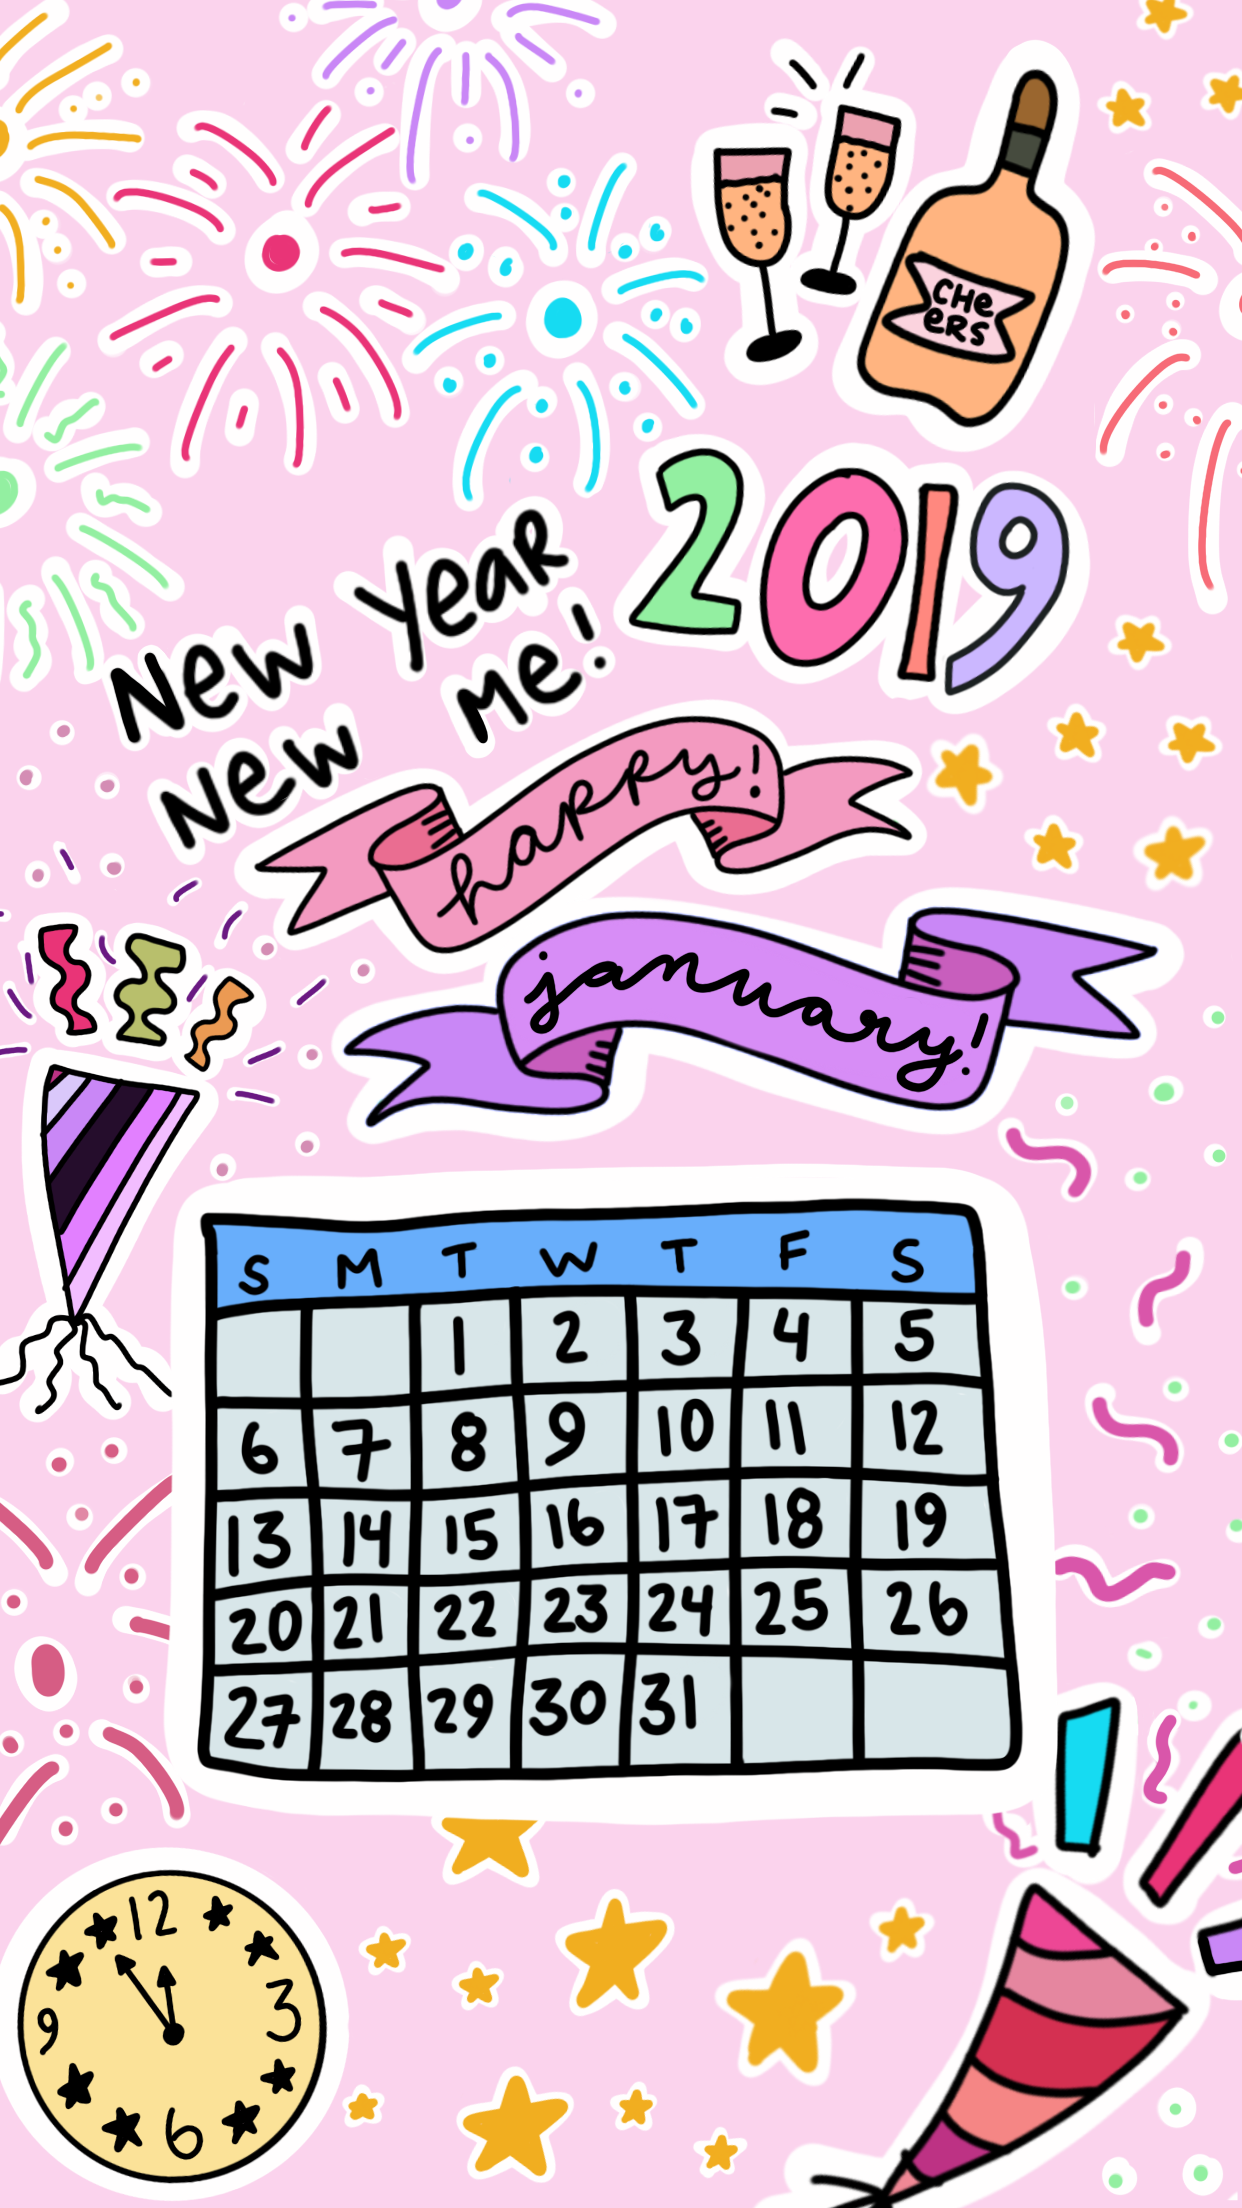 January 2019 FREE Phone Wallpaper WITH Calendar